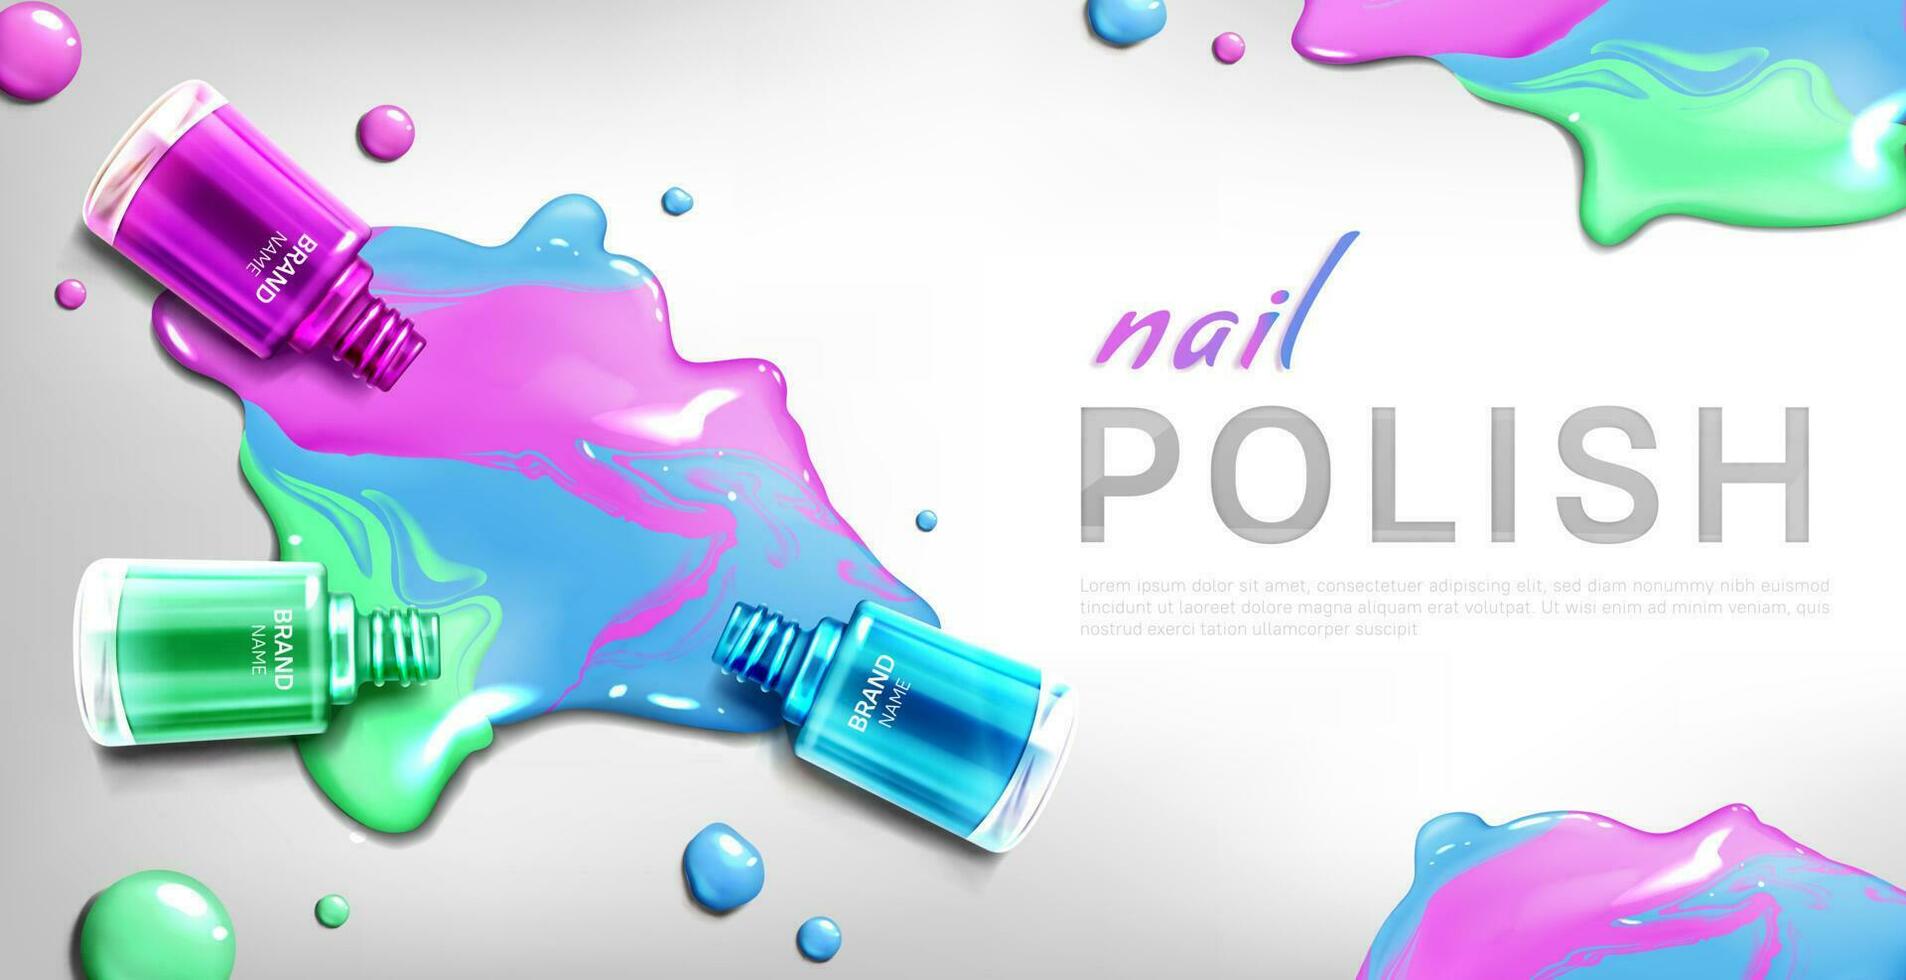 Nail polish 3d bottles mock up banner, advertising vector